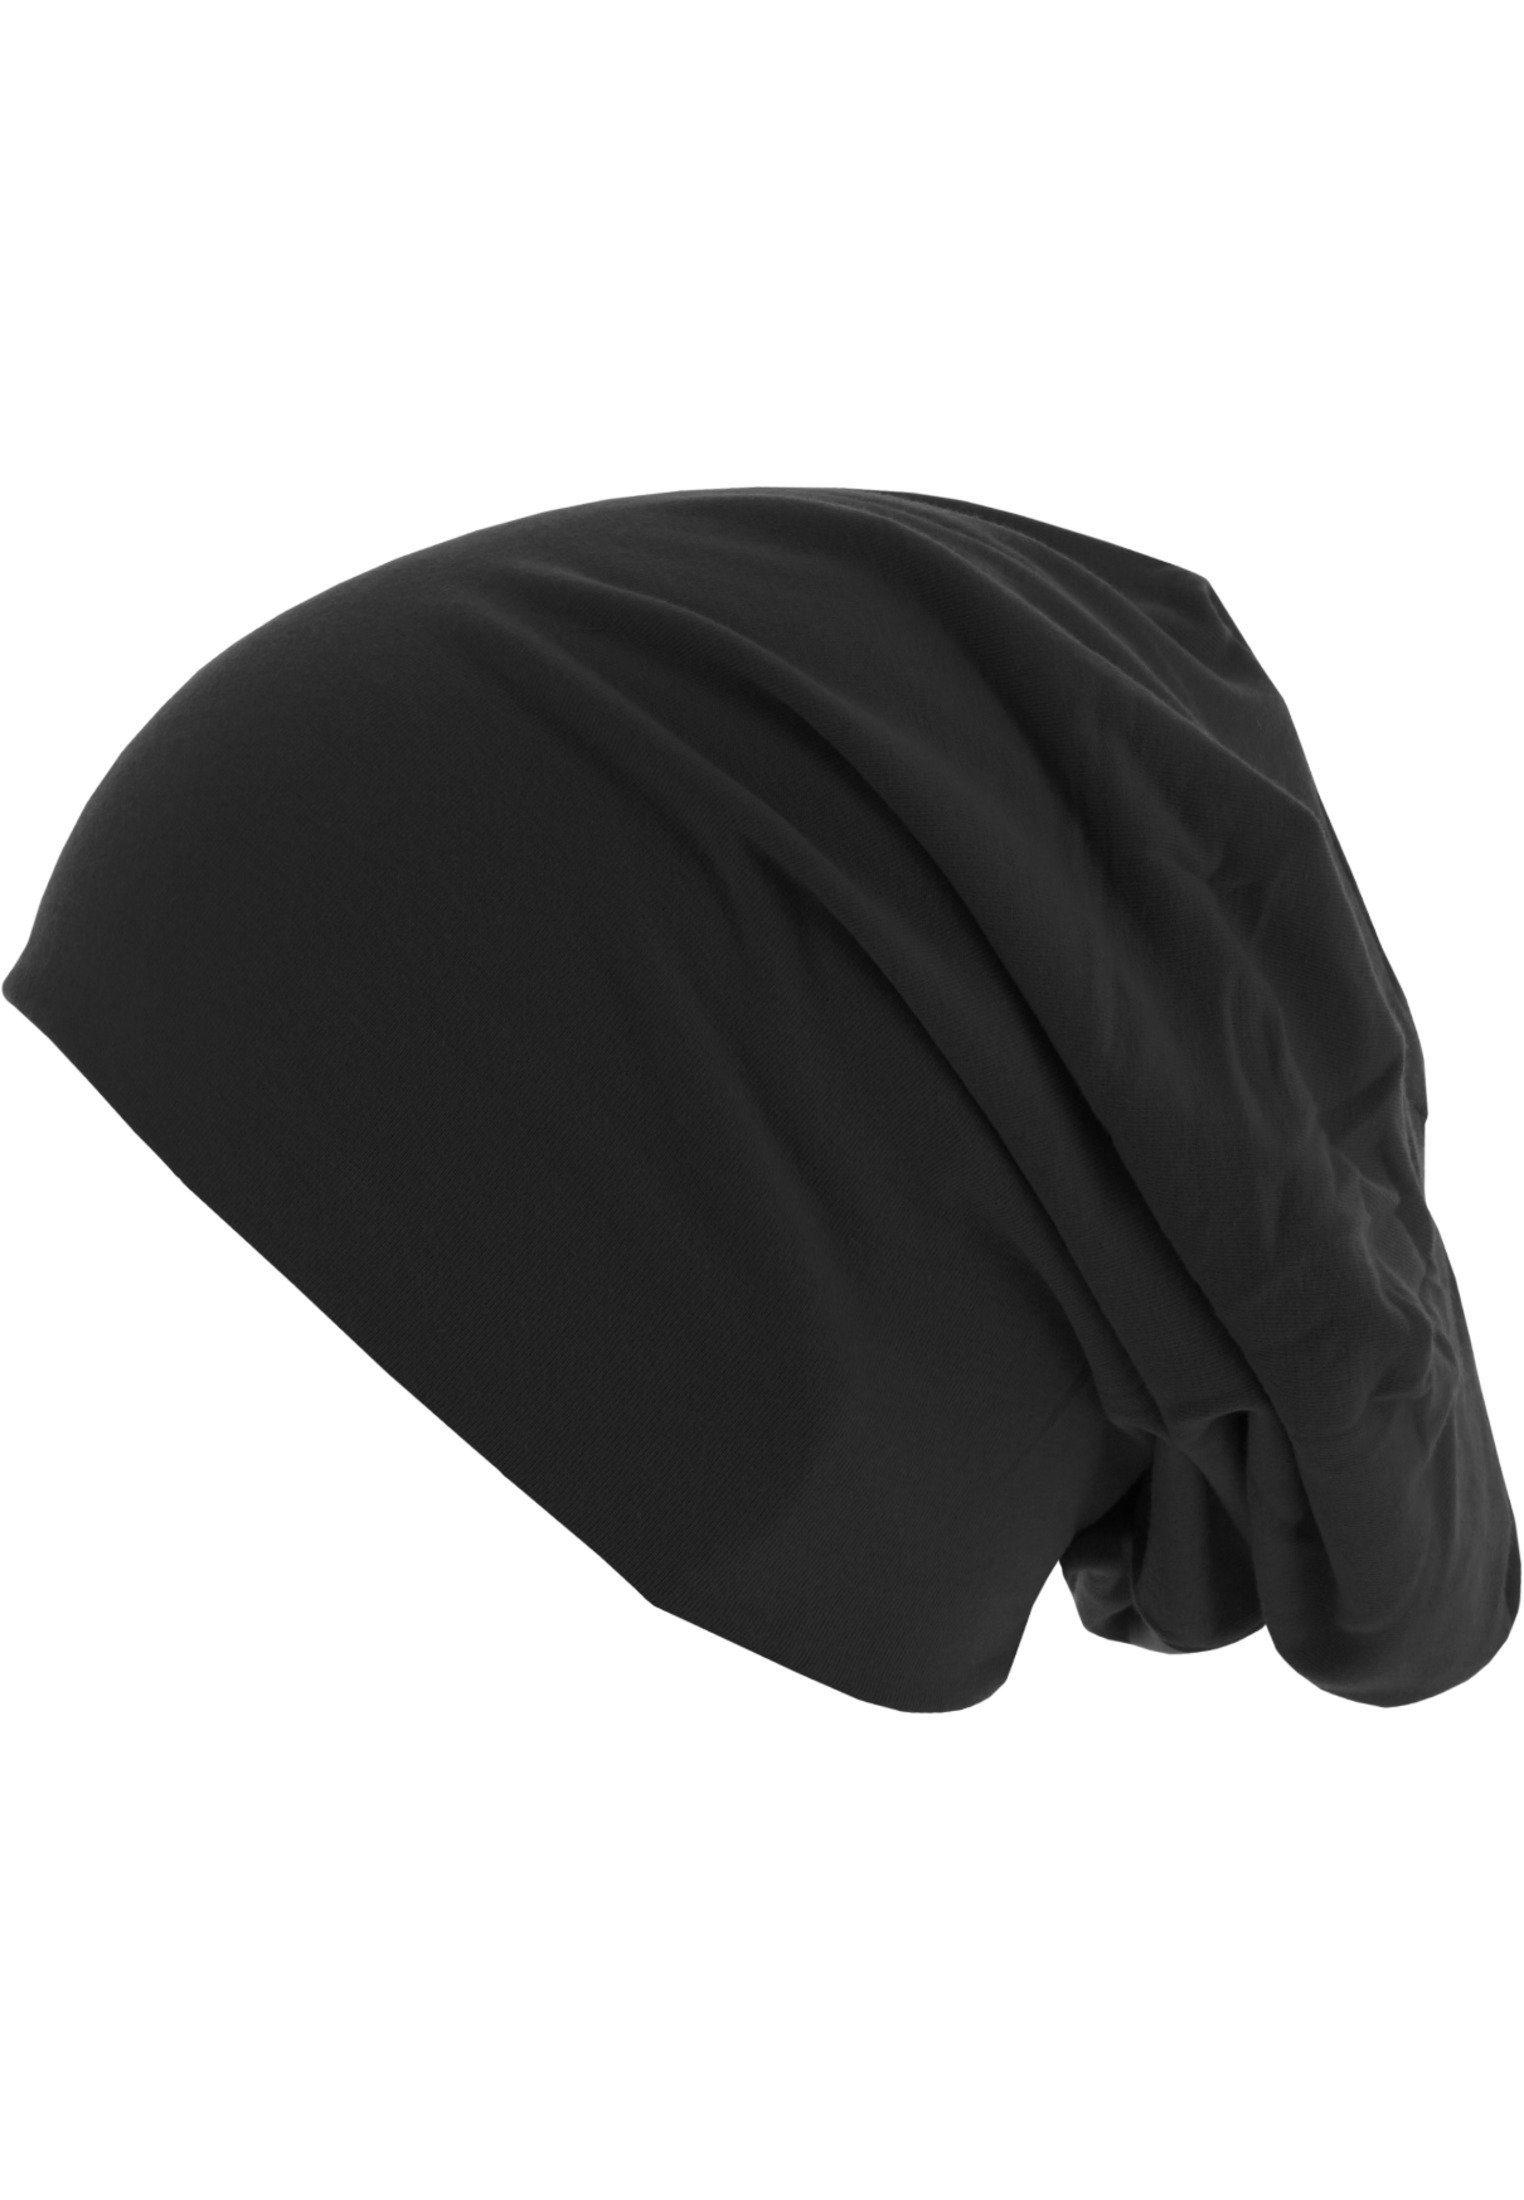 MSTRDS Beanie black/neongreen (1-St) Accessoires reversible Beanie Jersey